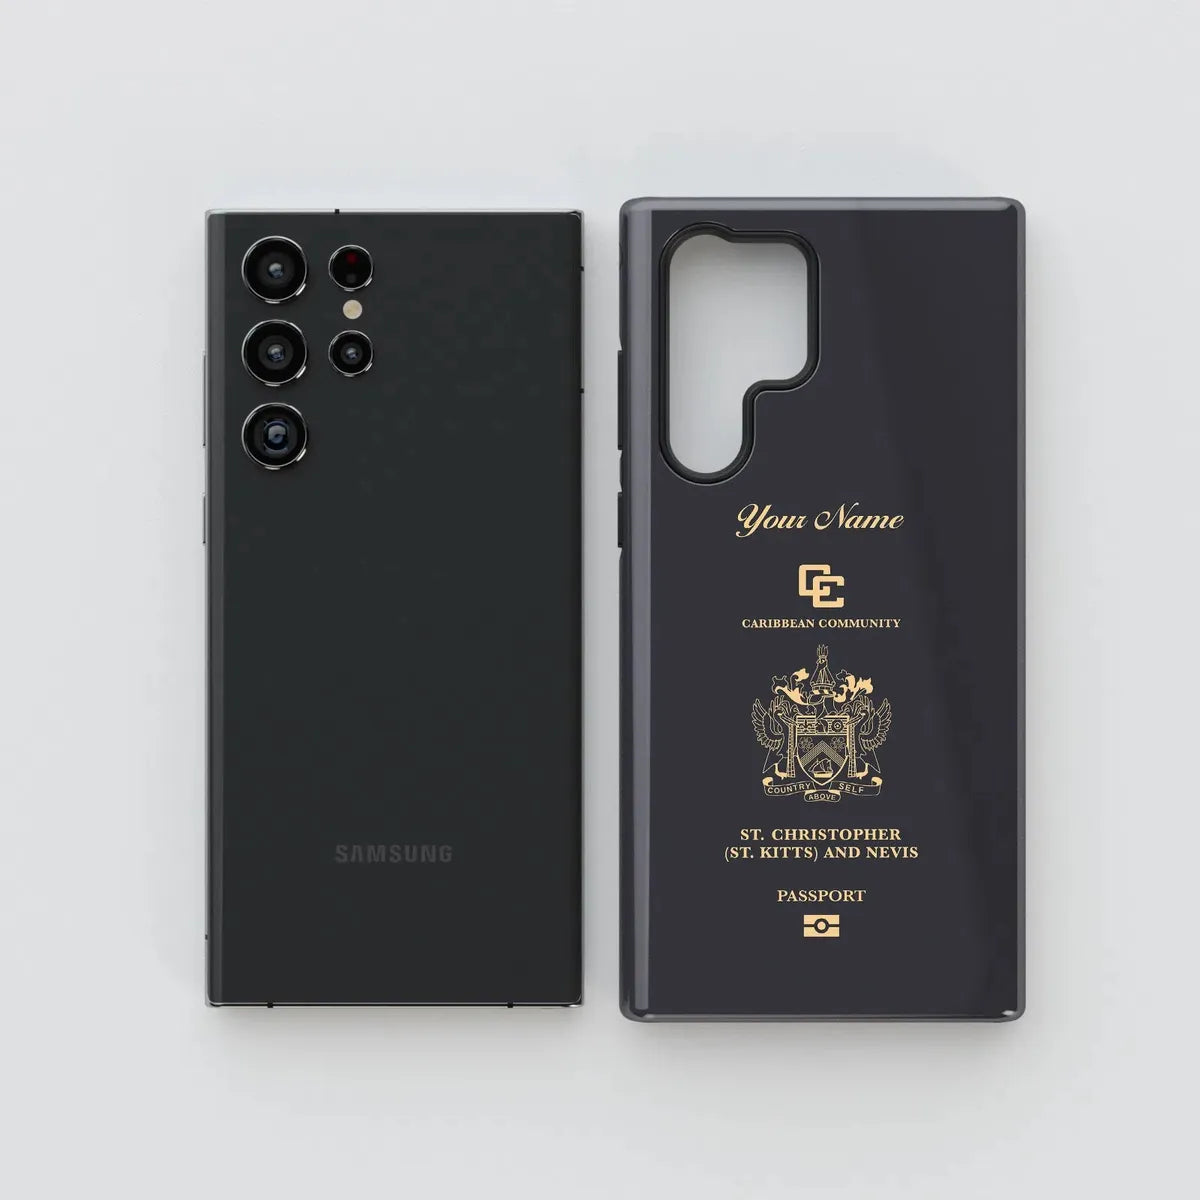 Saint Kitts And Nevis Passport - Samsung Galaxy S Case